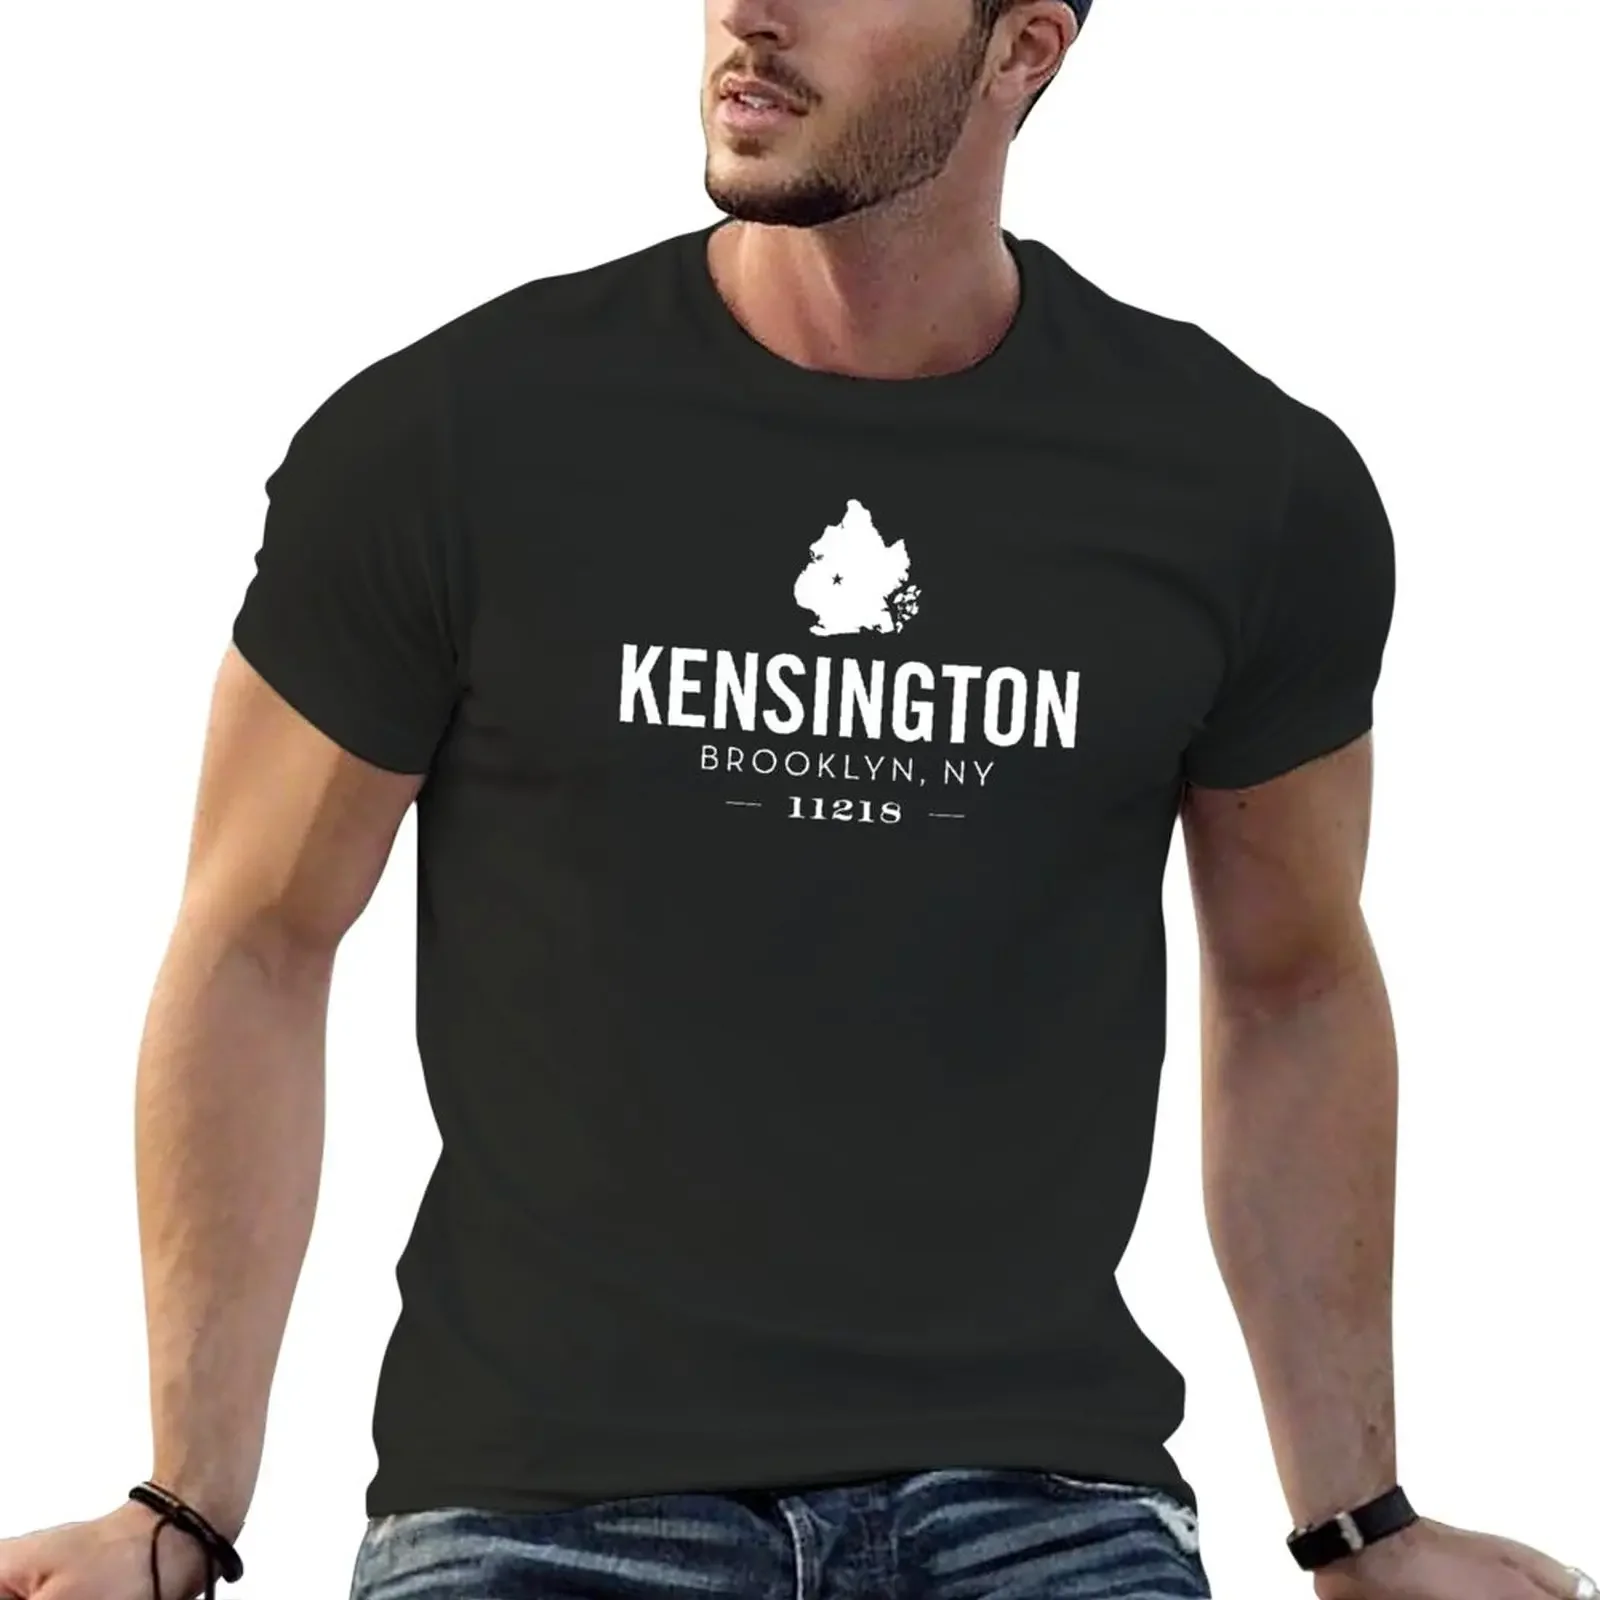 KENSINGTON - BROOKLYN, NY (black) T-Shirt animal prinfor boys aesthetic clothes mens t shirts